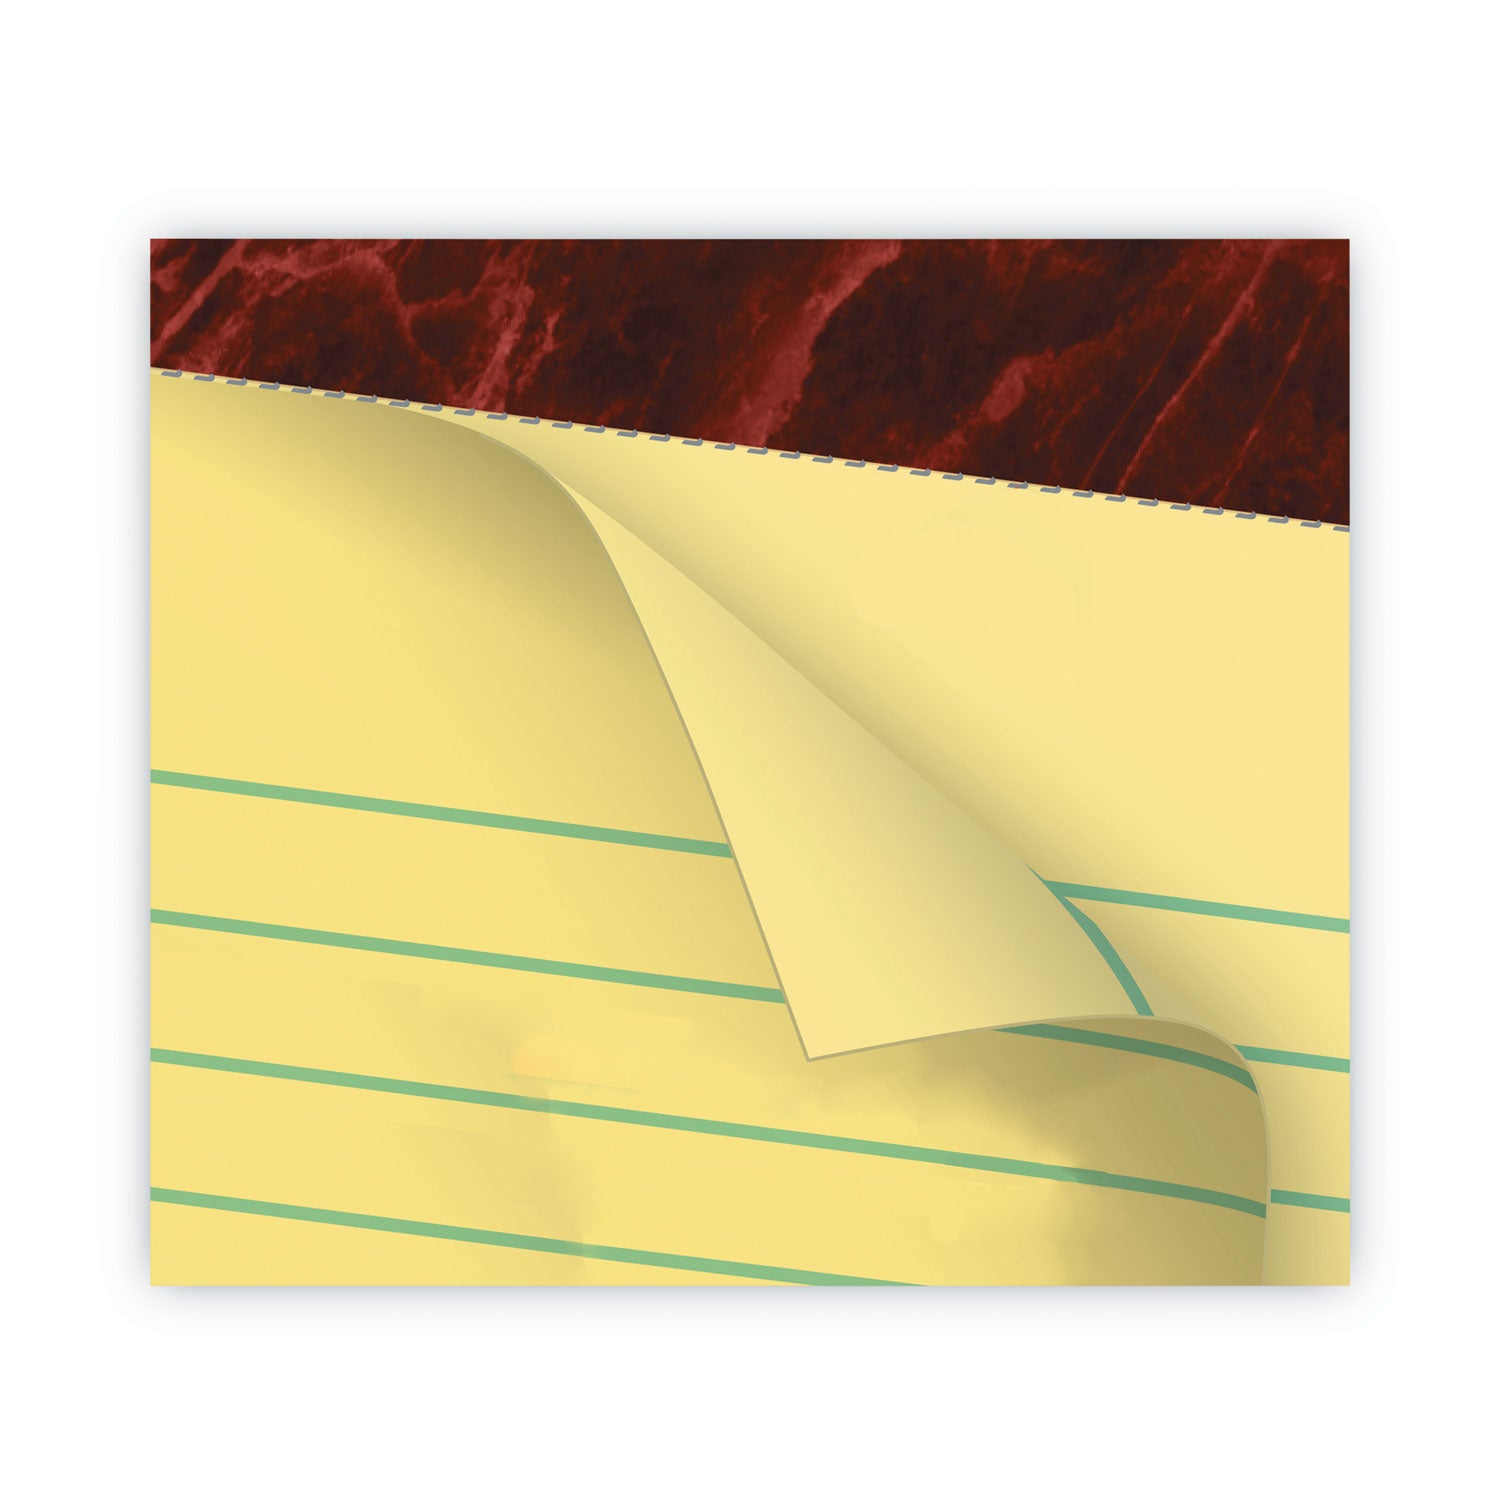 Gold Fibre Quality Writing Pads, Narrow Rule, 50 Canary-Yellow 8.5 x 11.75 Sheets, Dozen - 